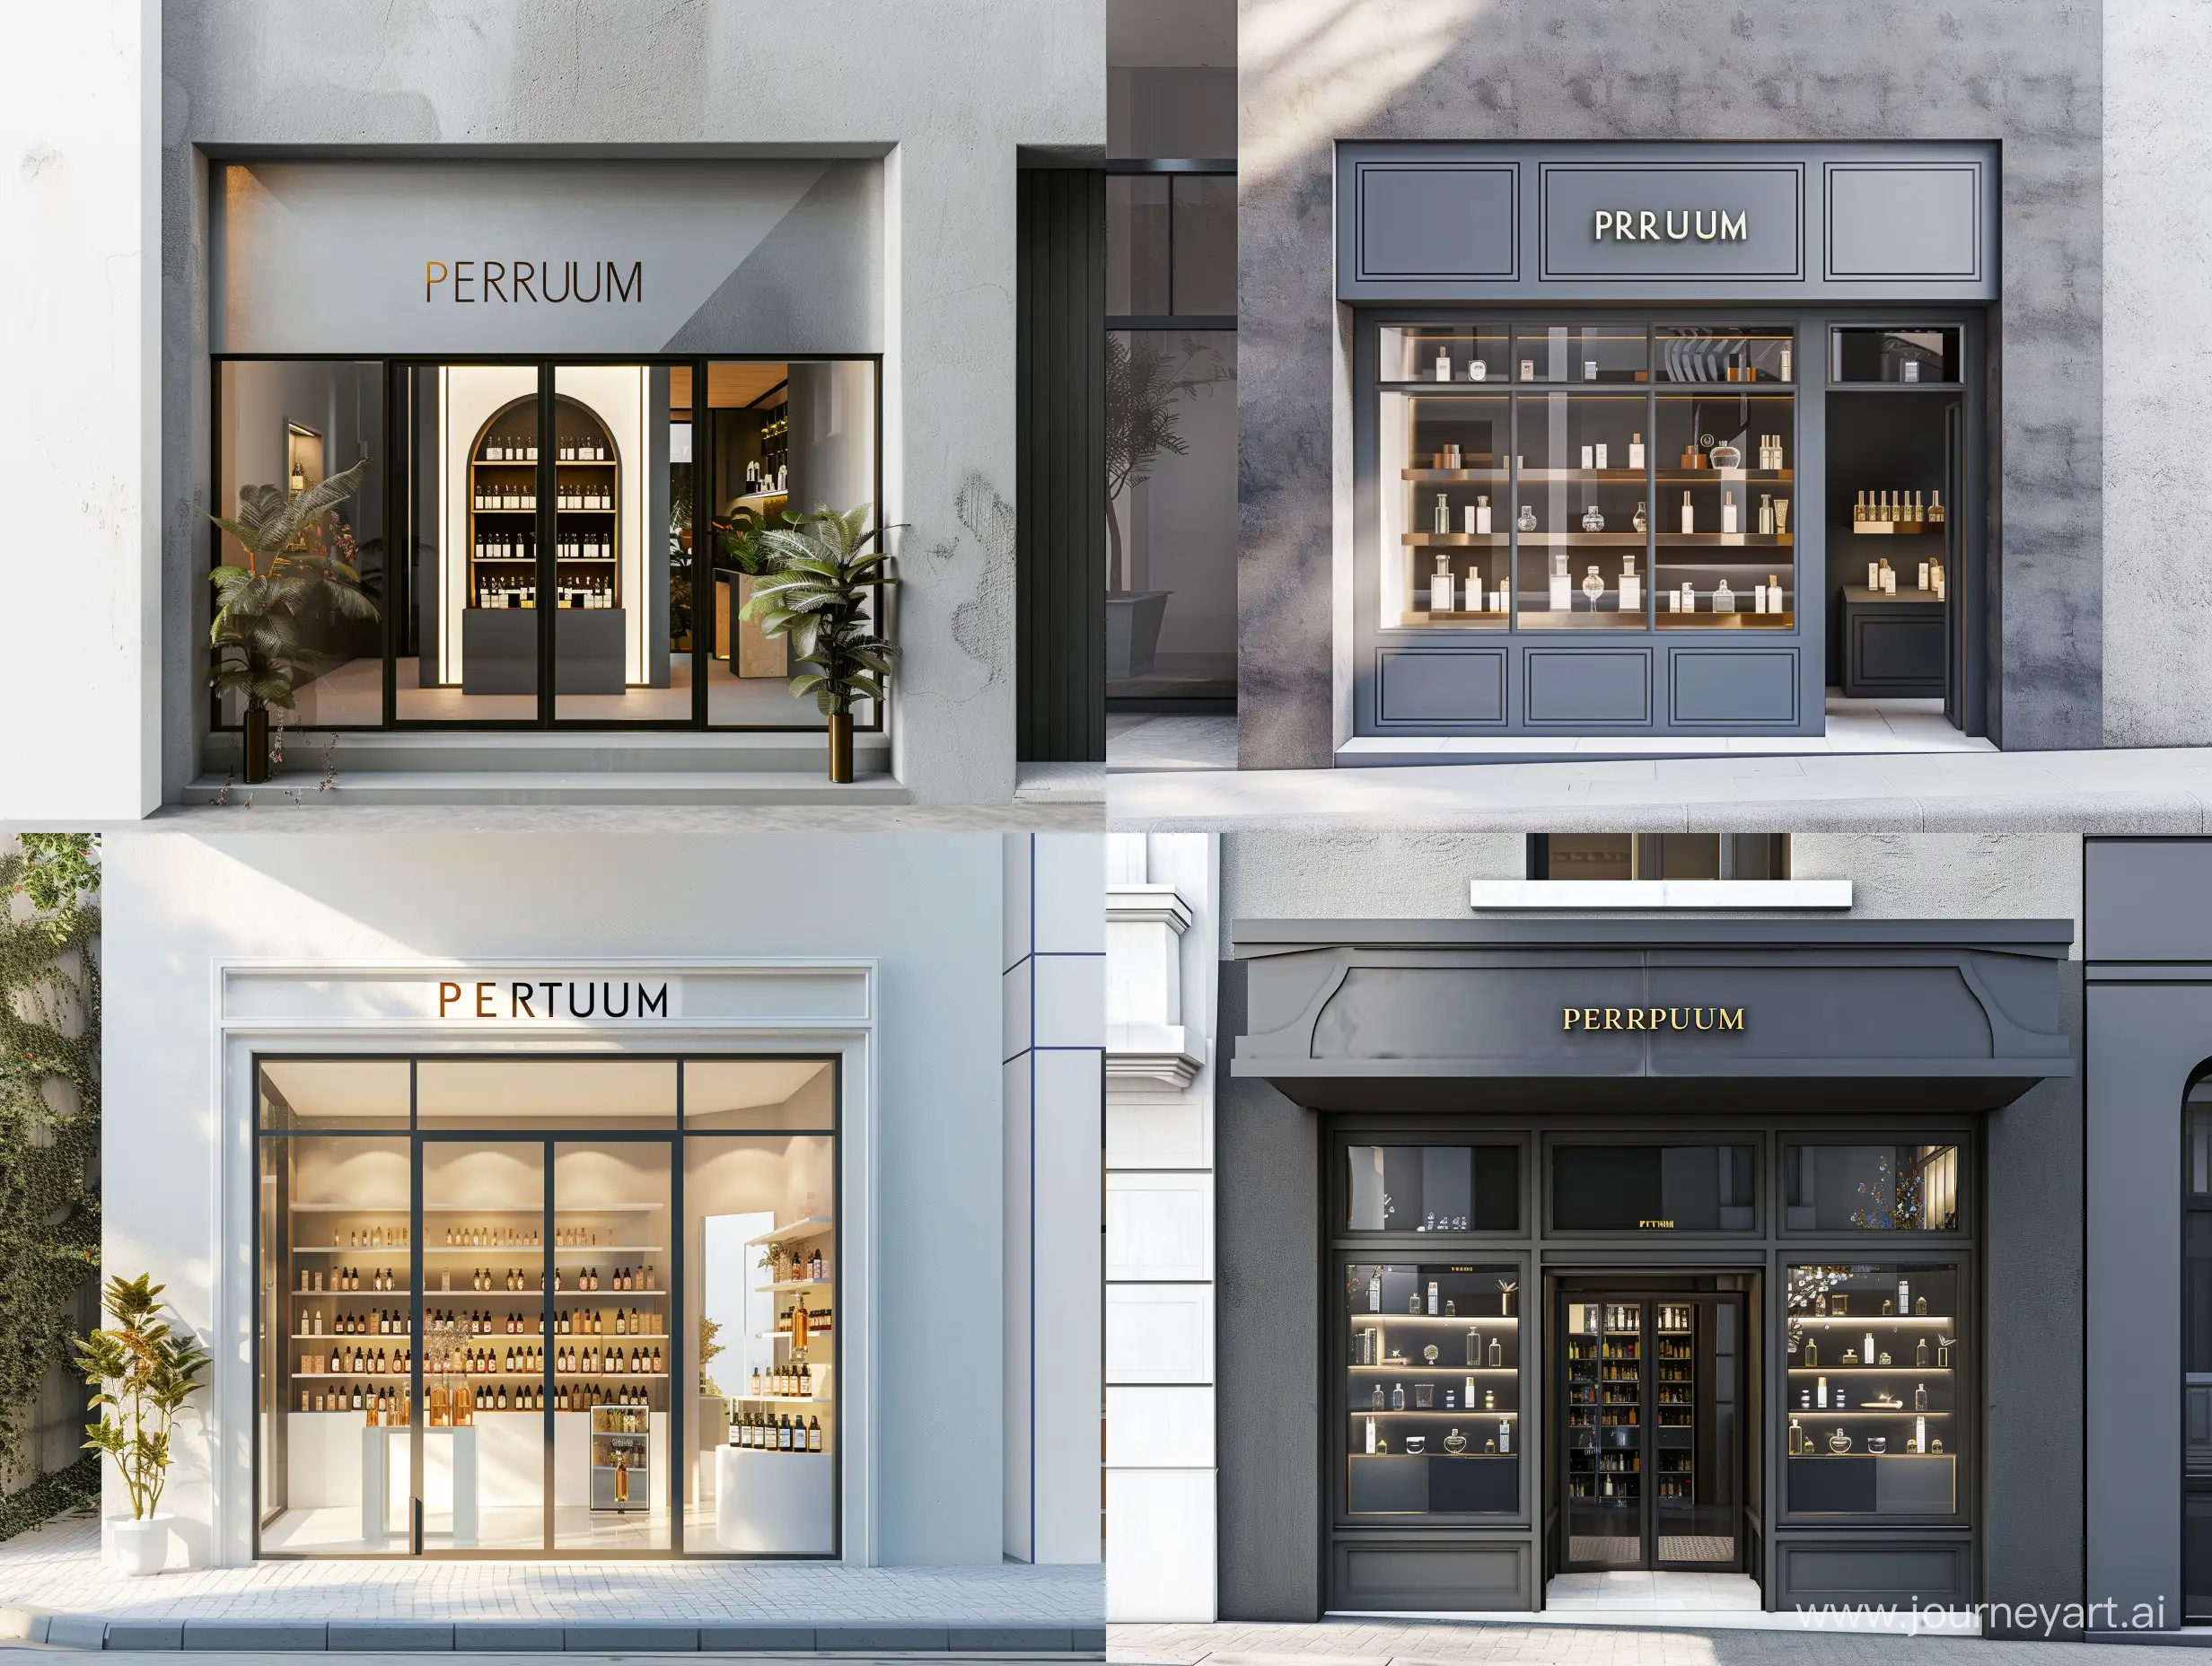 Luxury-Perfume-Shop-Facade-Elegant-Storefront-of-PERFUM